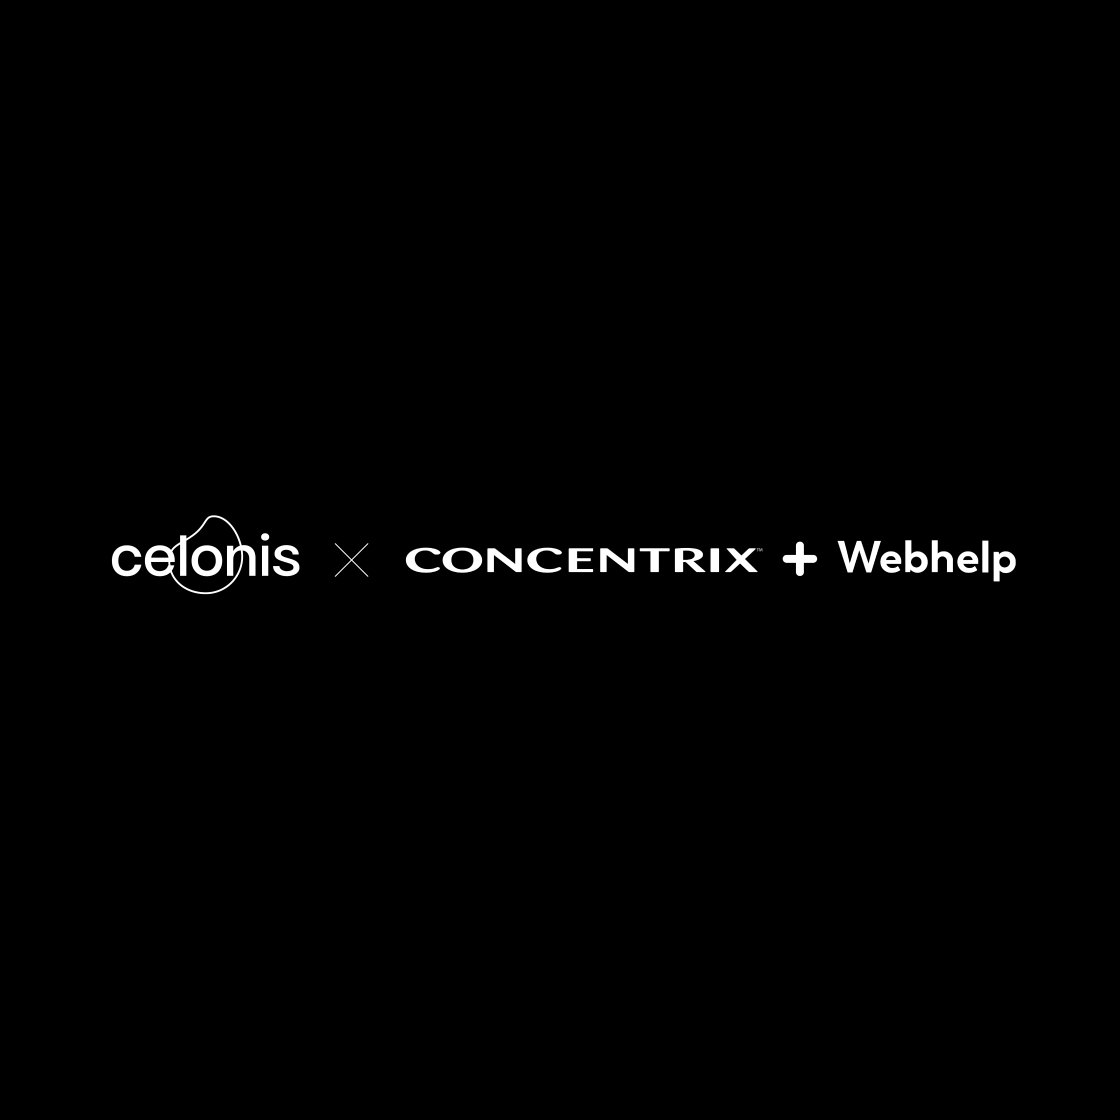 240112 Celonis-Concentrix-Webhelp-Hero-Image-Final